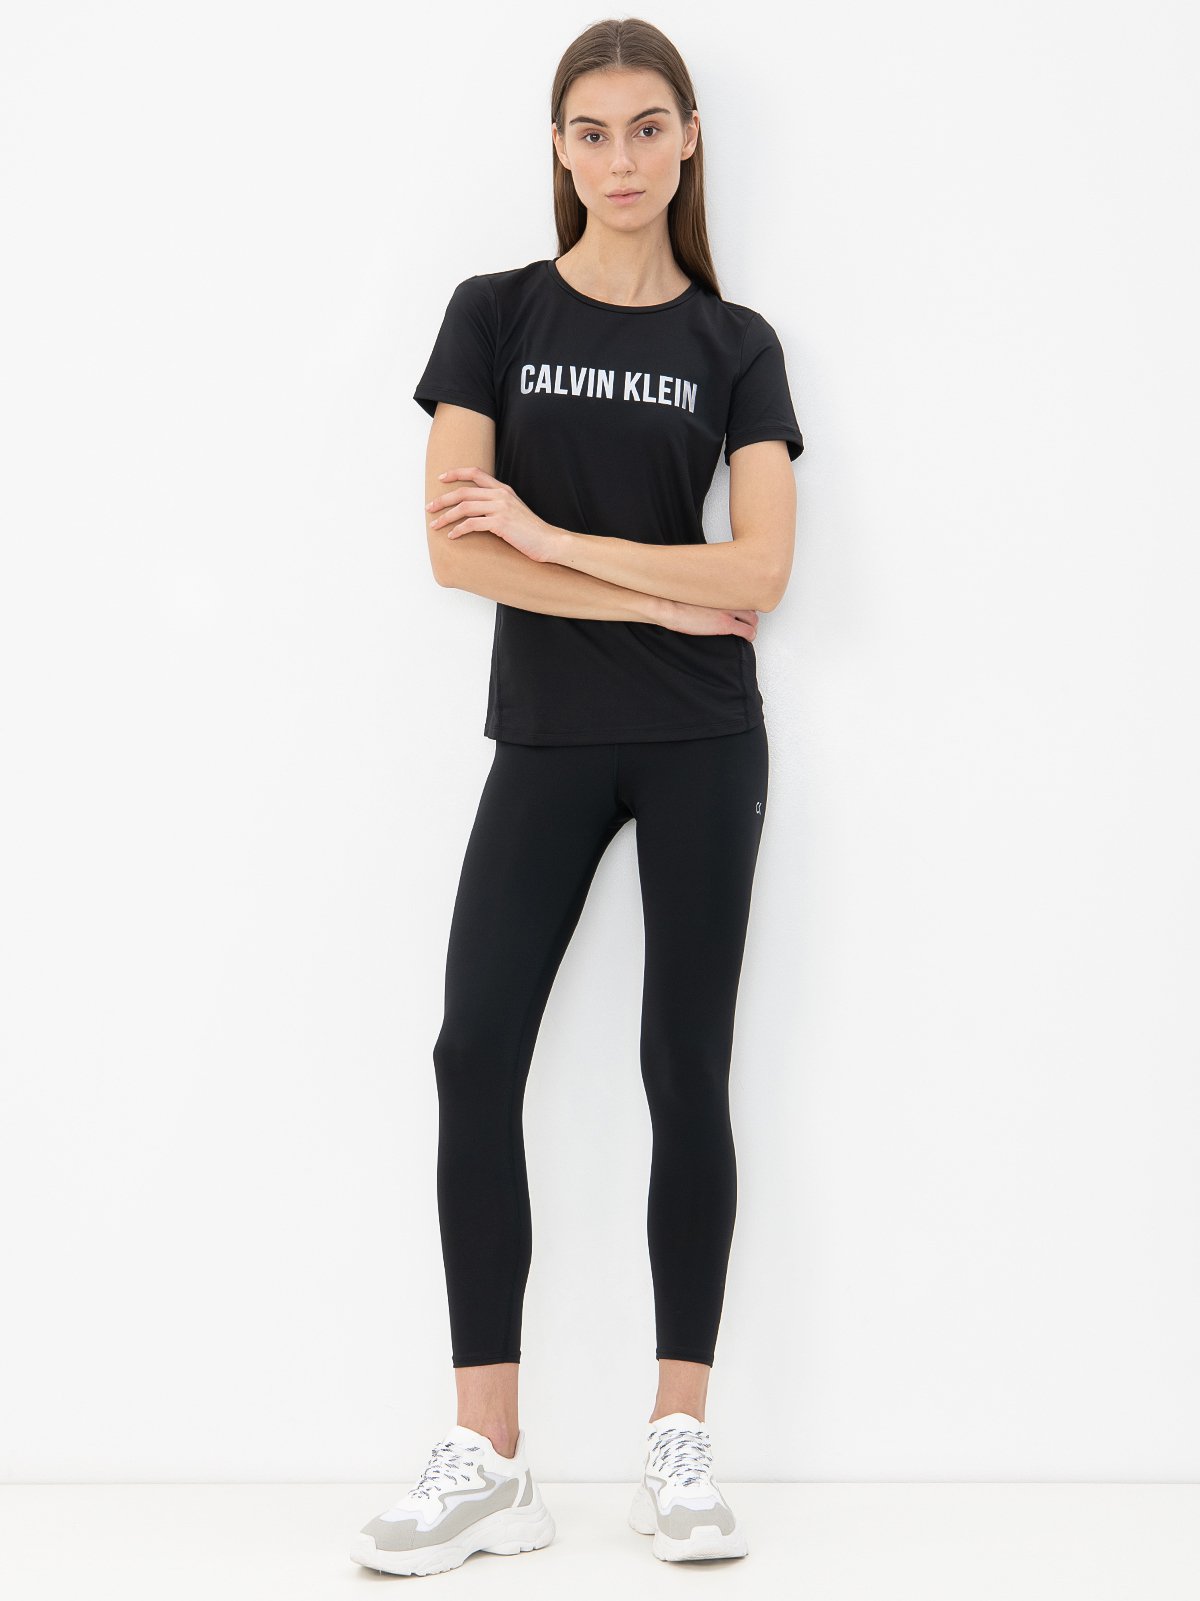 Calvin Klein Underwear Skinny Leggings in Black